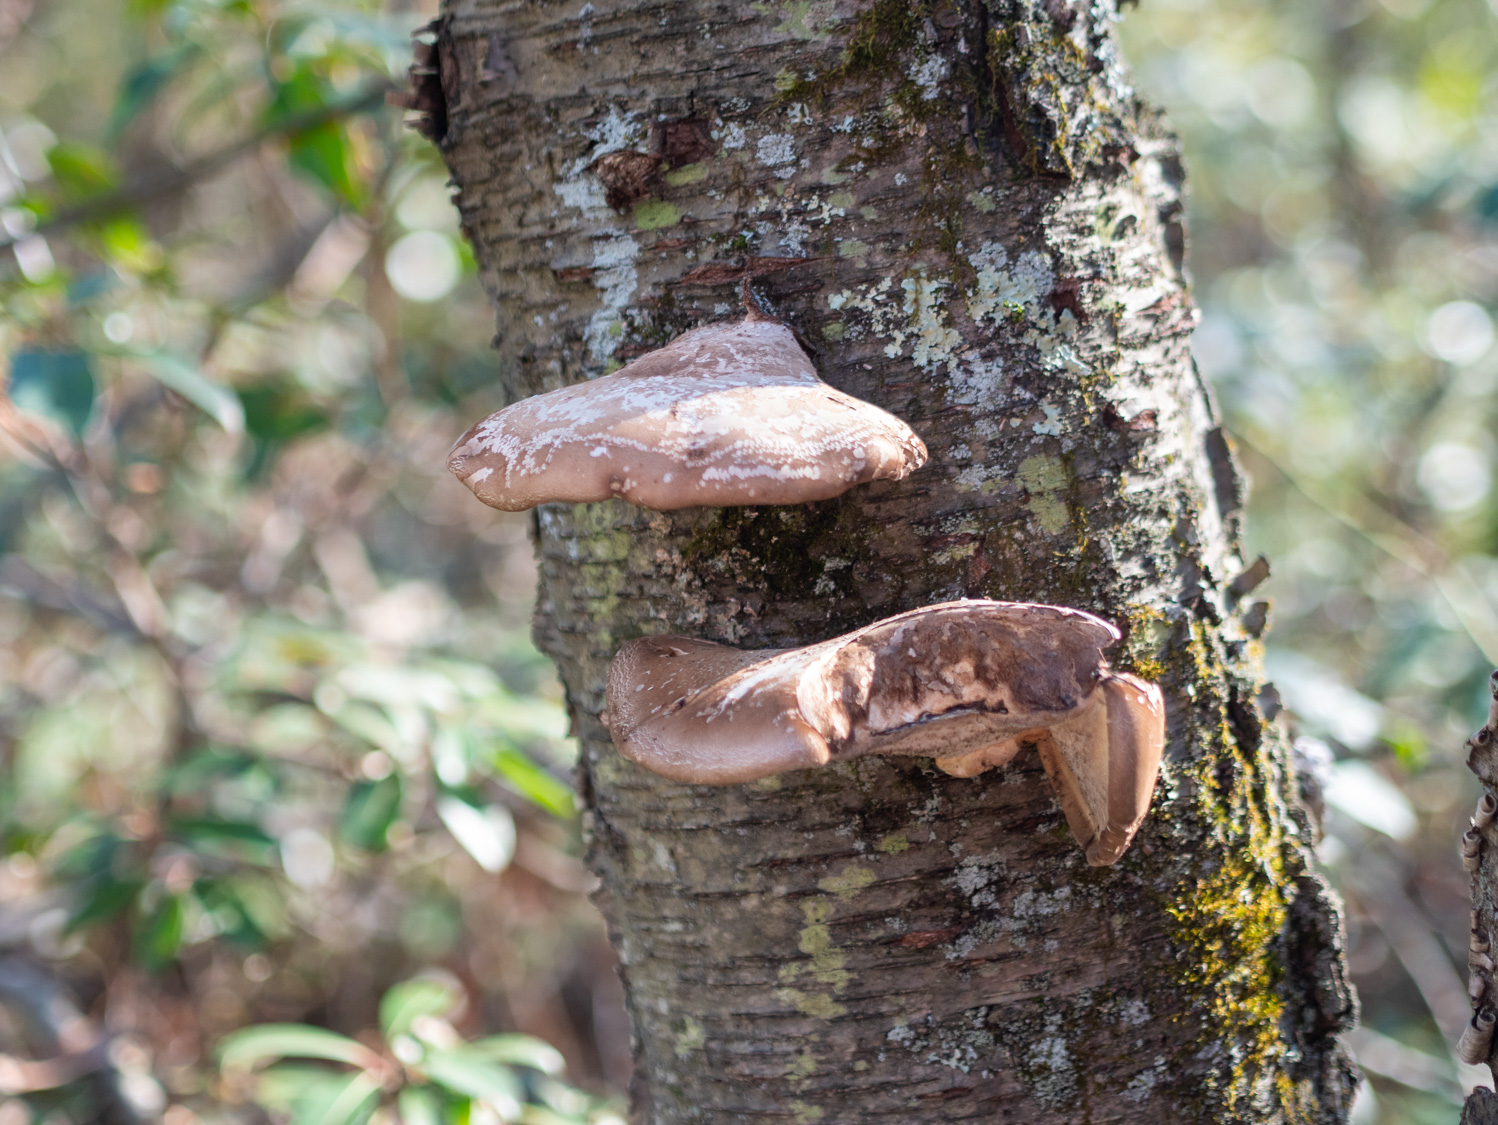 Some flourishing mushrooms.